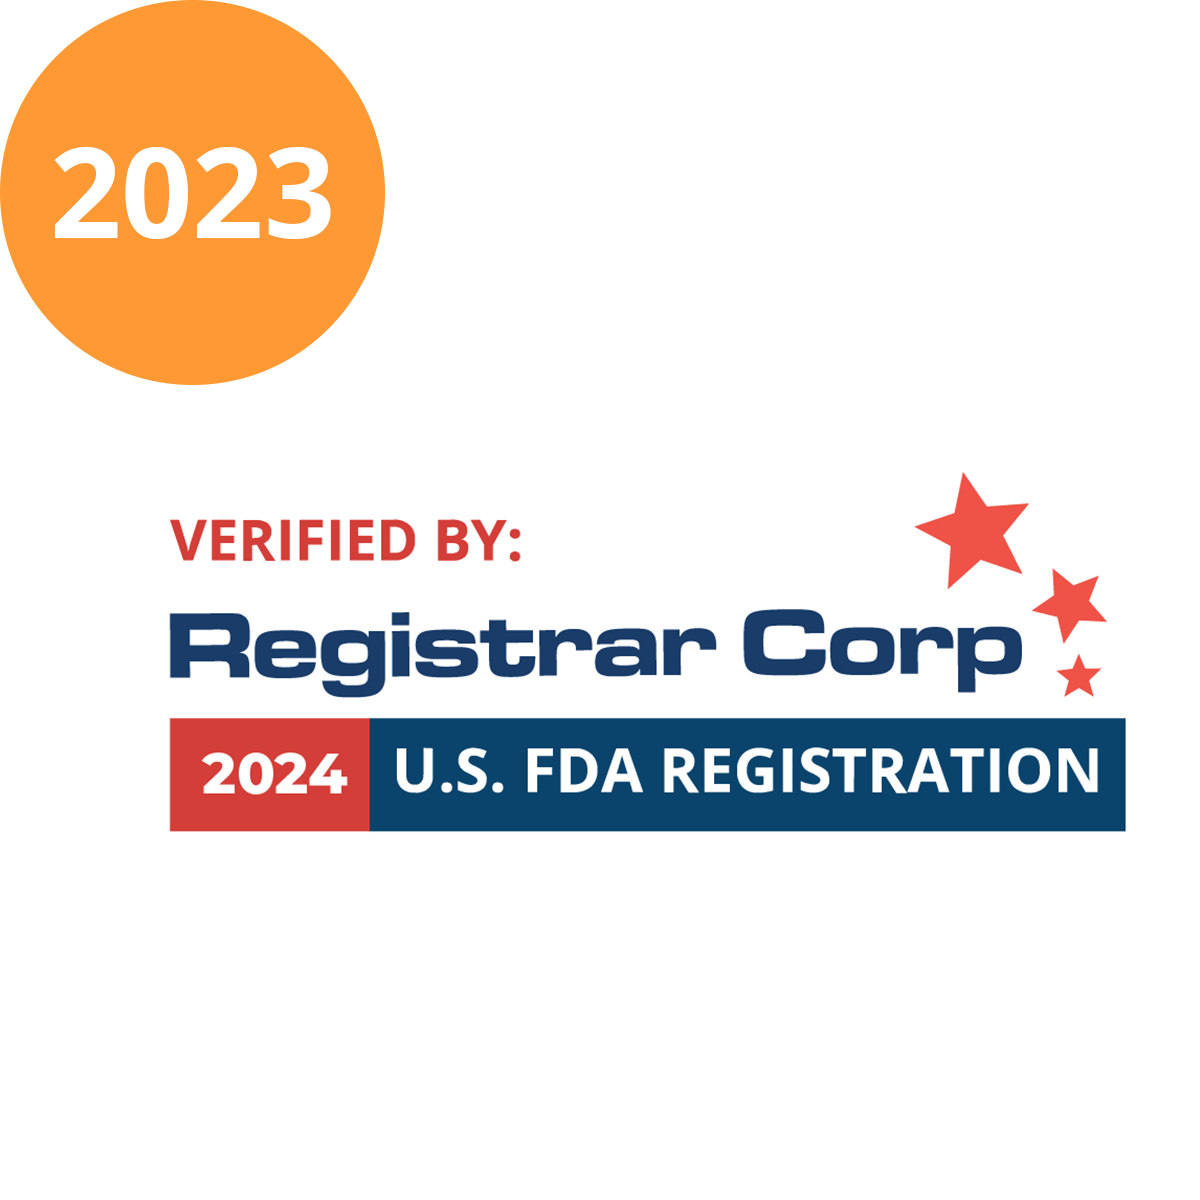 Verified by Registrar Corp FDA Registration